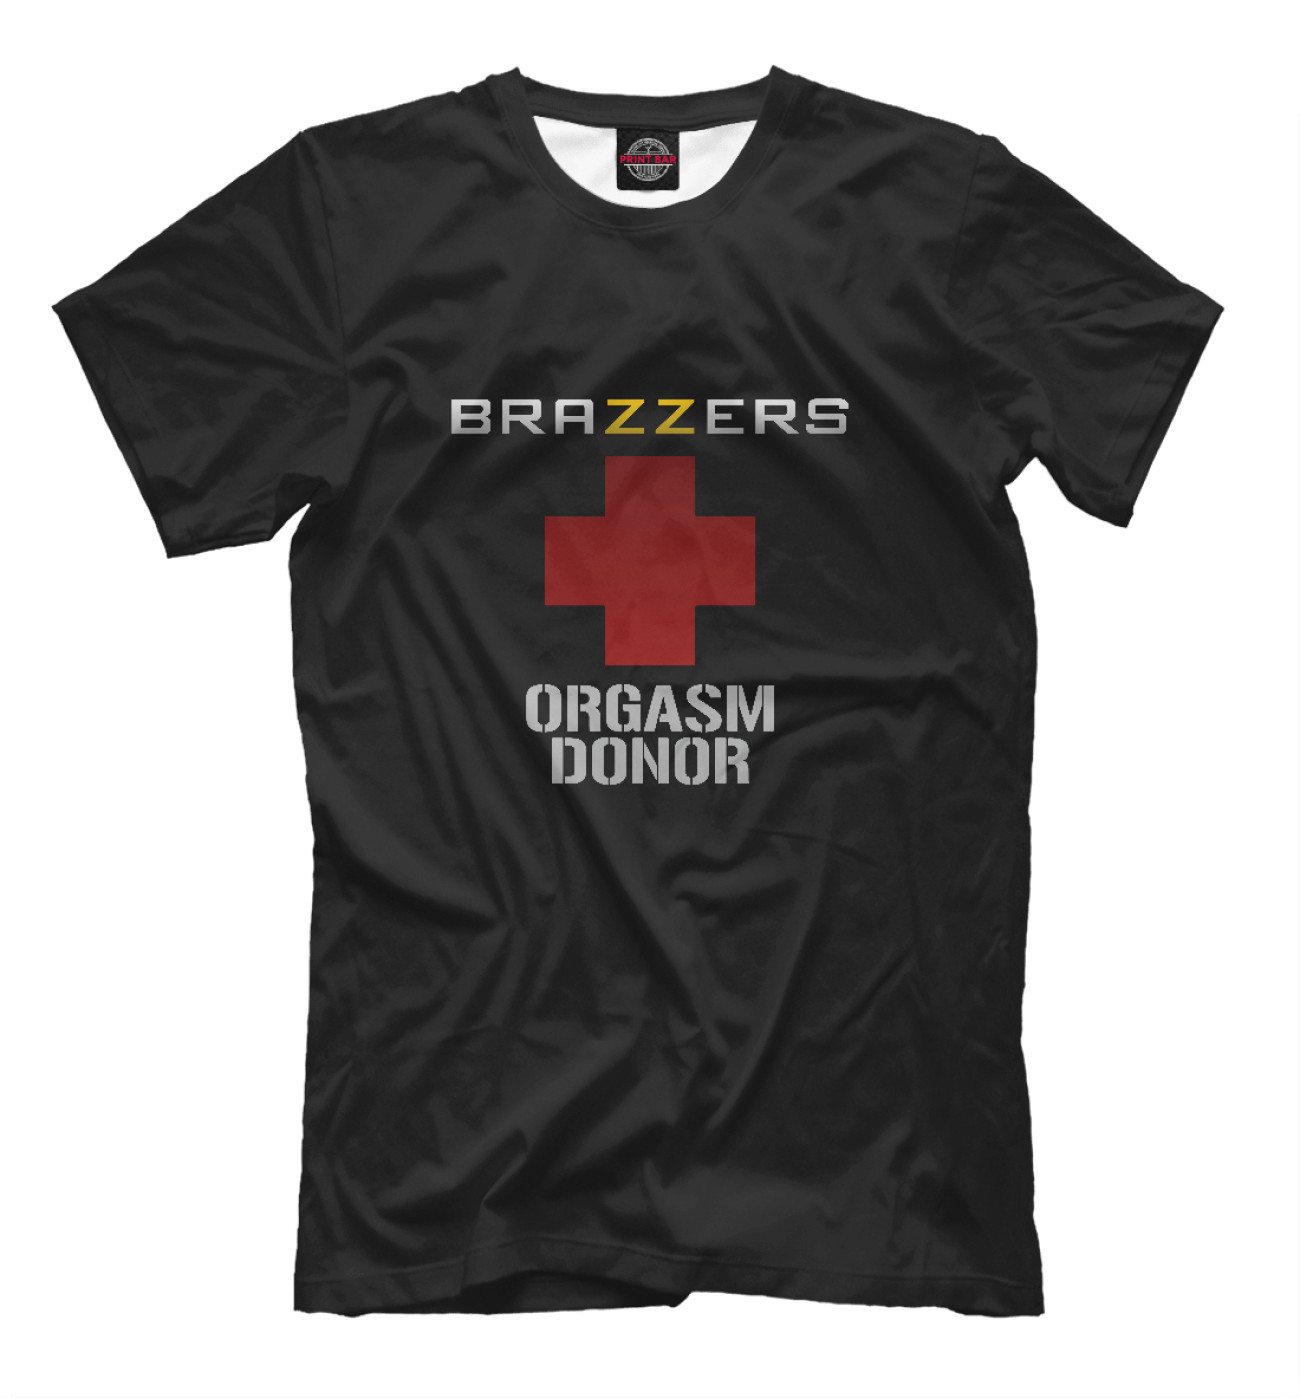 Мужская Футболка Brazzers orgasm donor, артикул: BRZ-139586-fut-2